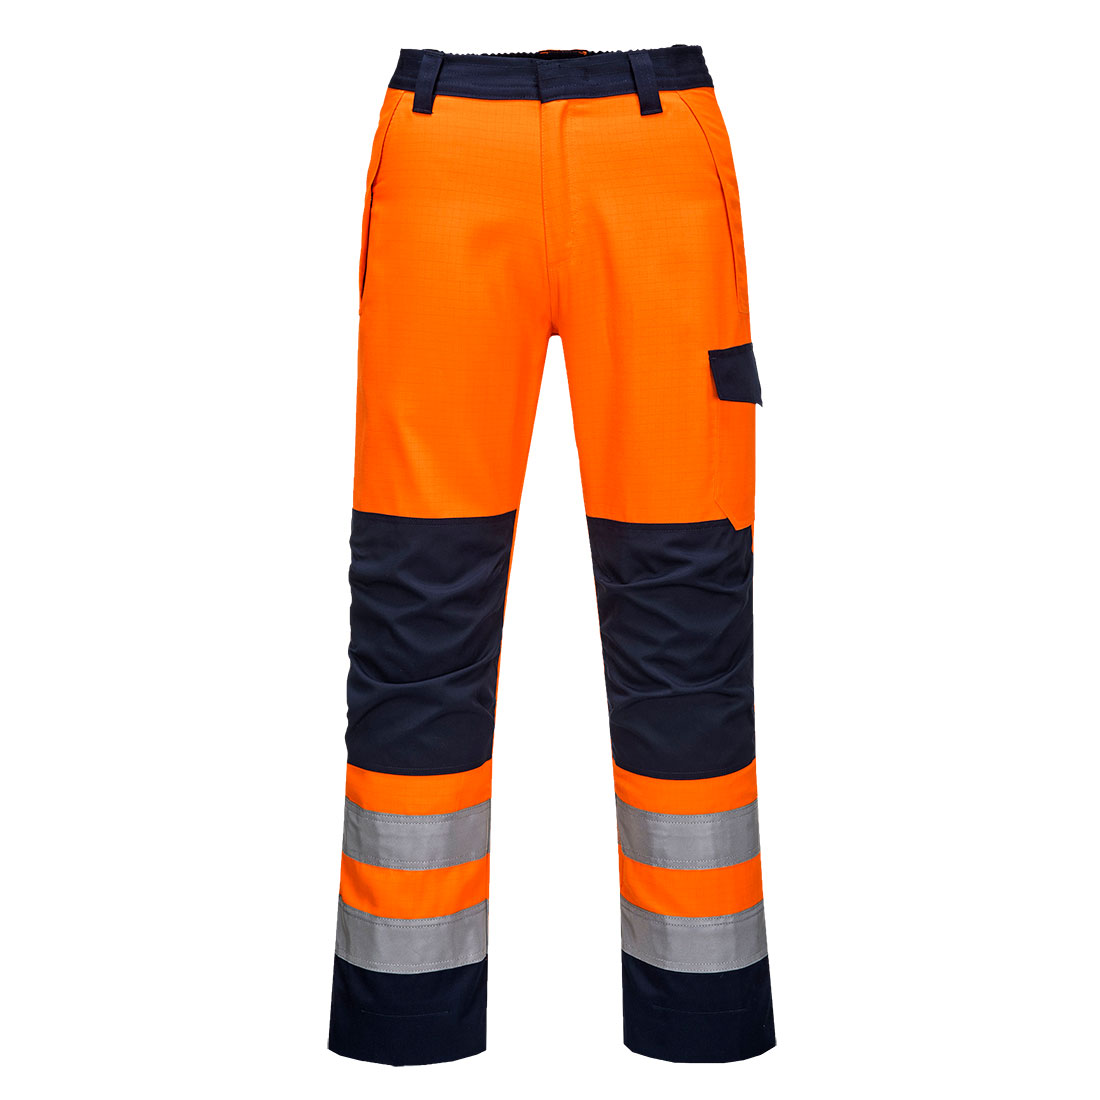 Modaflame RIS Orange/Navy Trouser Trousers & Shorts MV36